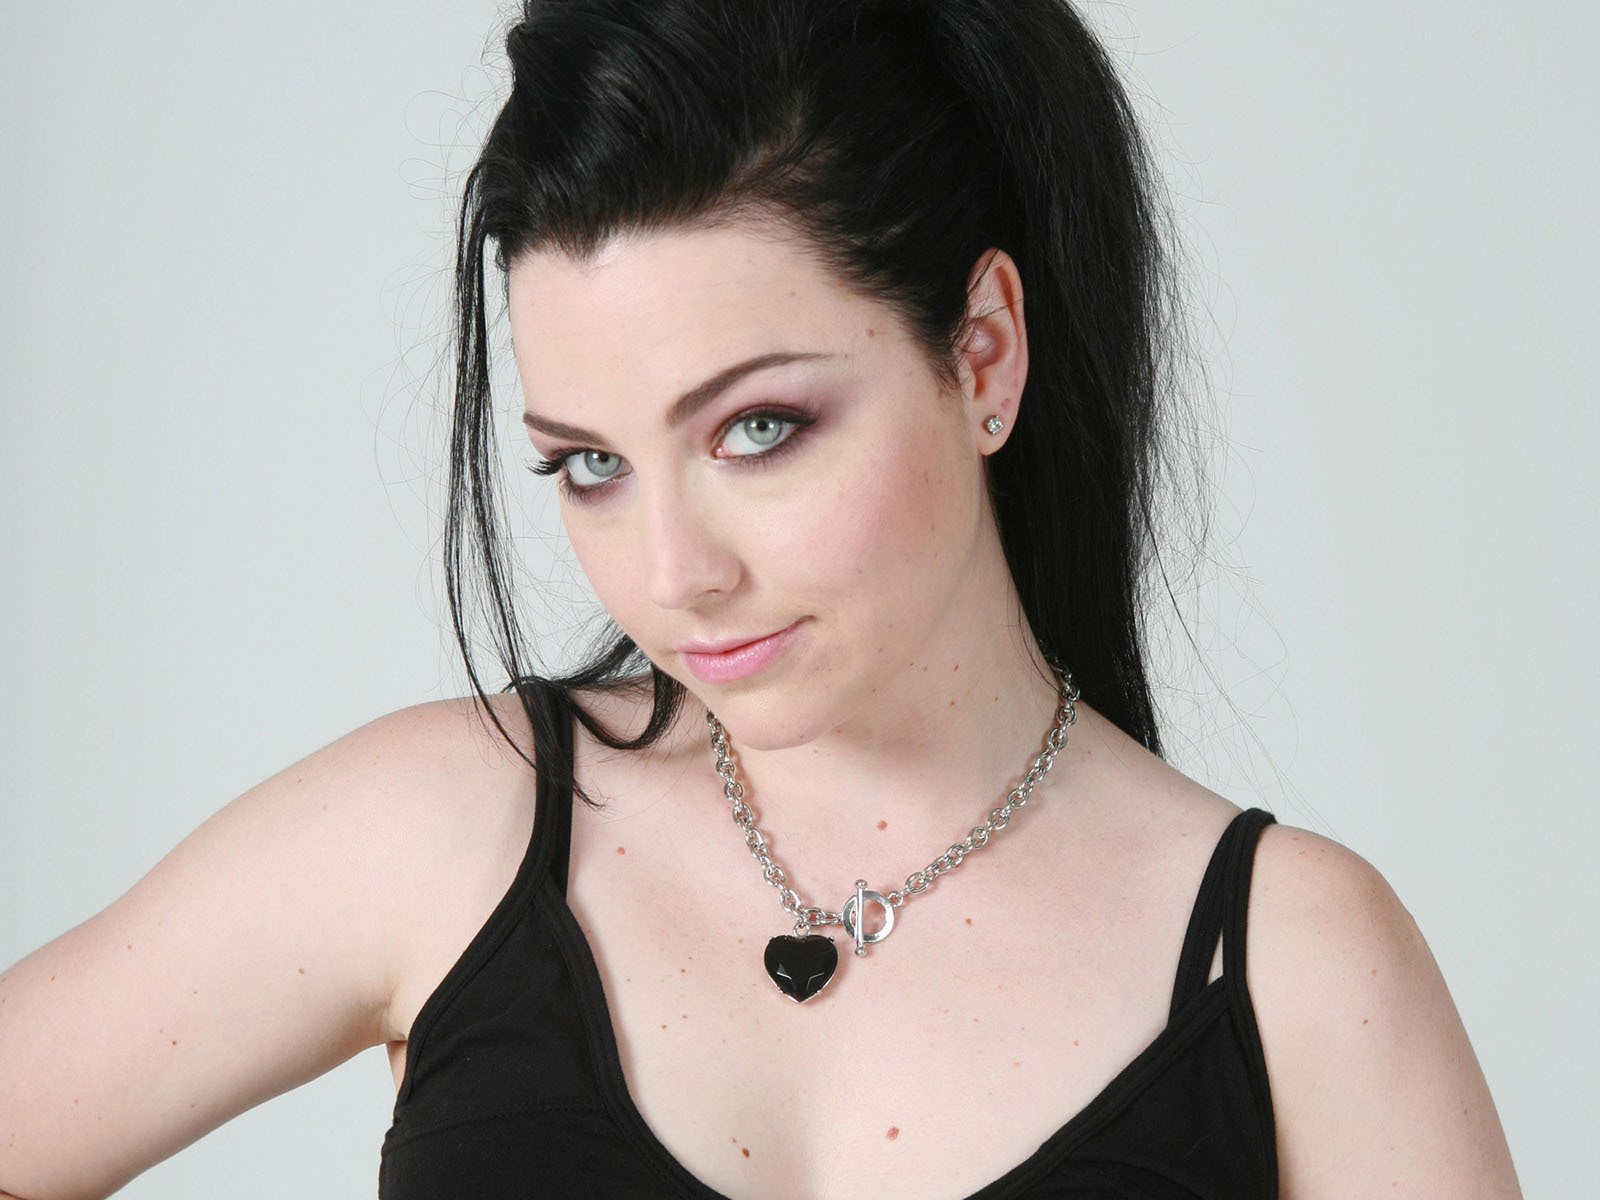 Singer Women Black Hair Blue Eyes Smiling Looking At Viewer Eyeliner Black Tops Heart Necklace 1600x1200